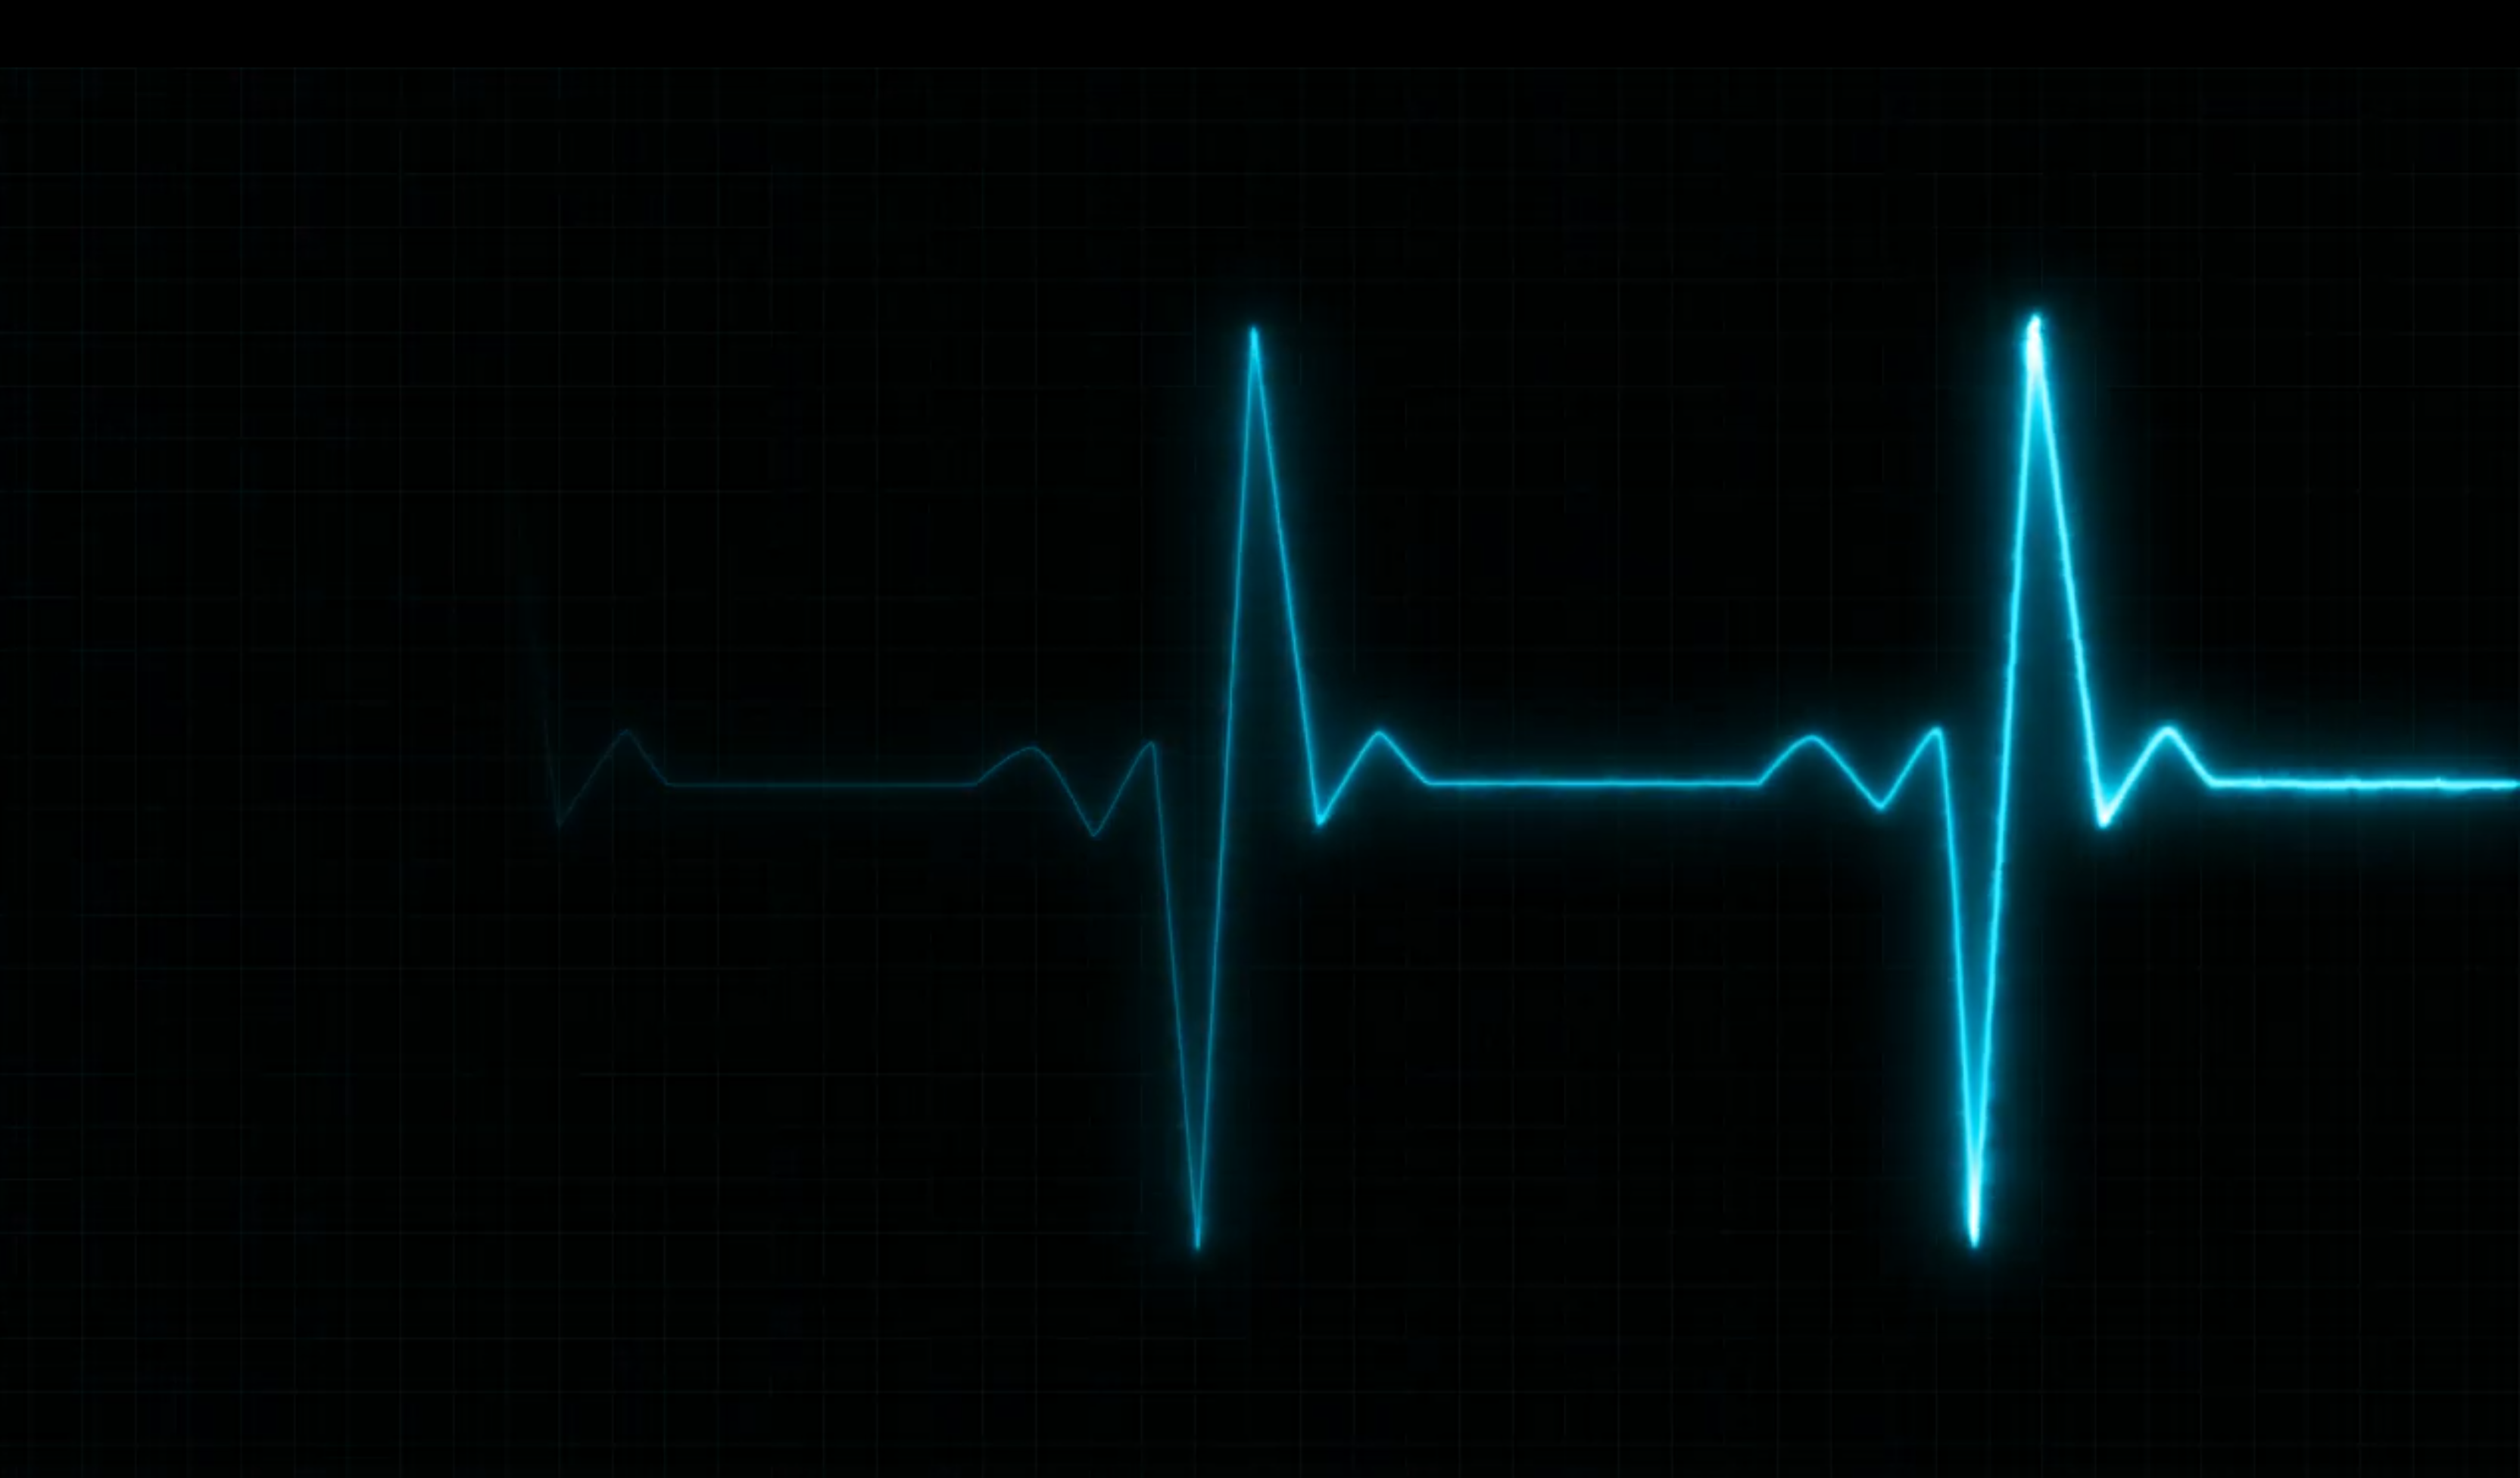 Electrocardiogram against a black background